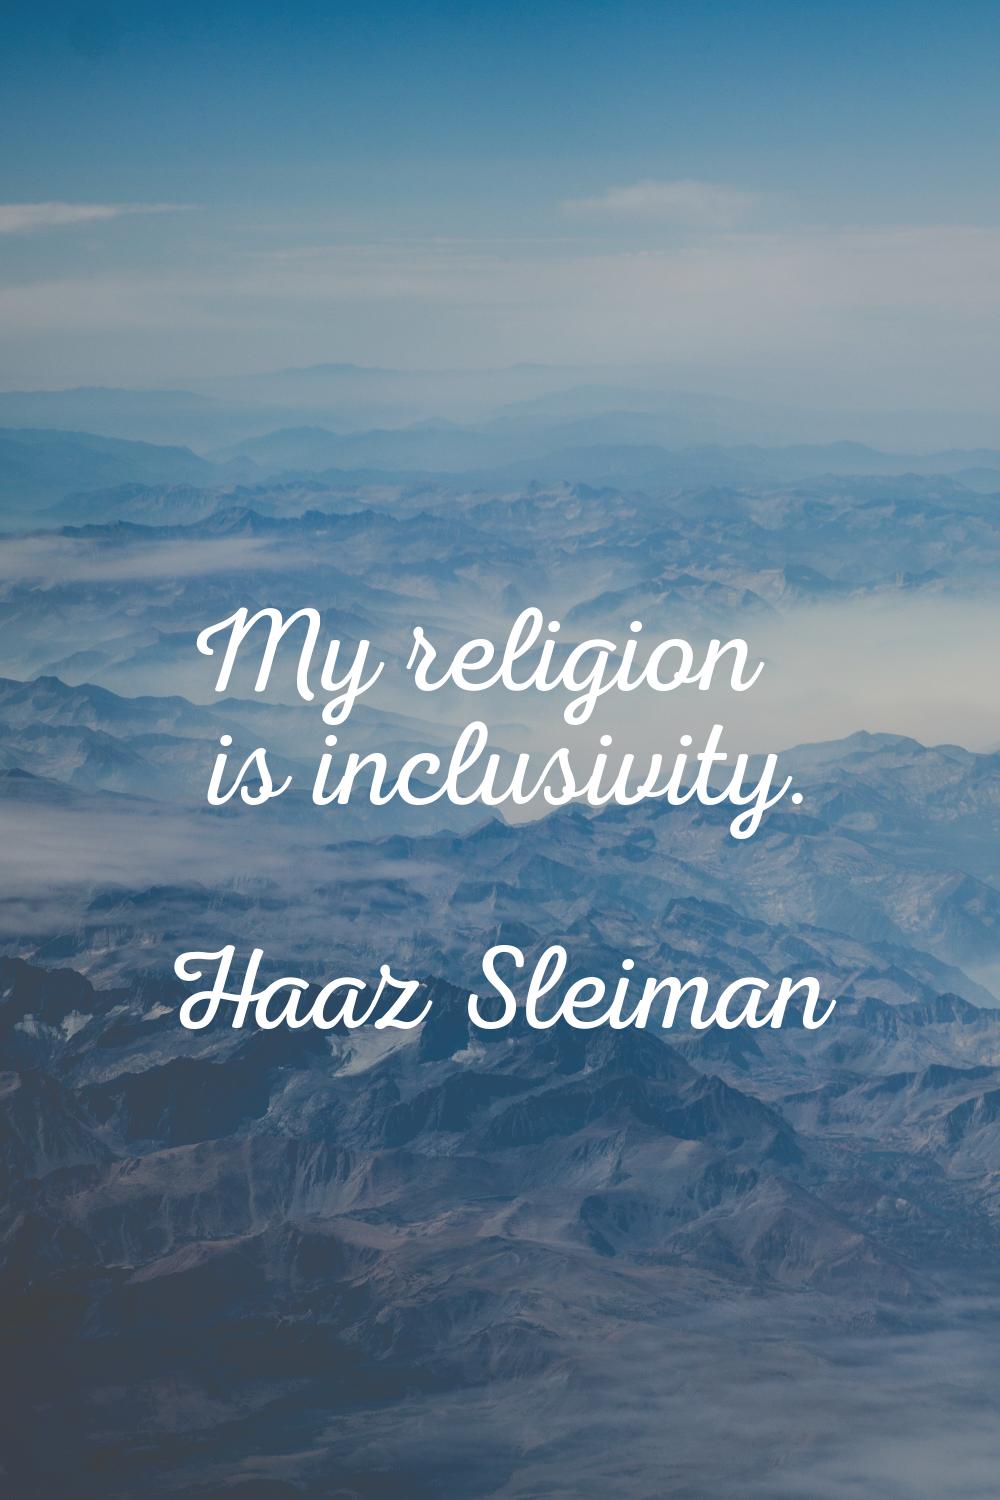 My religion is inclusivity.